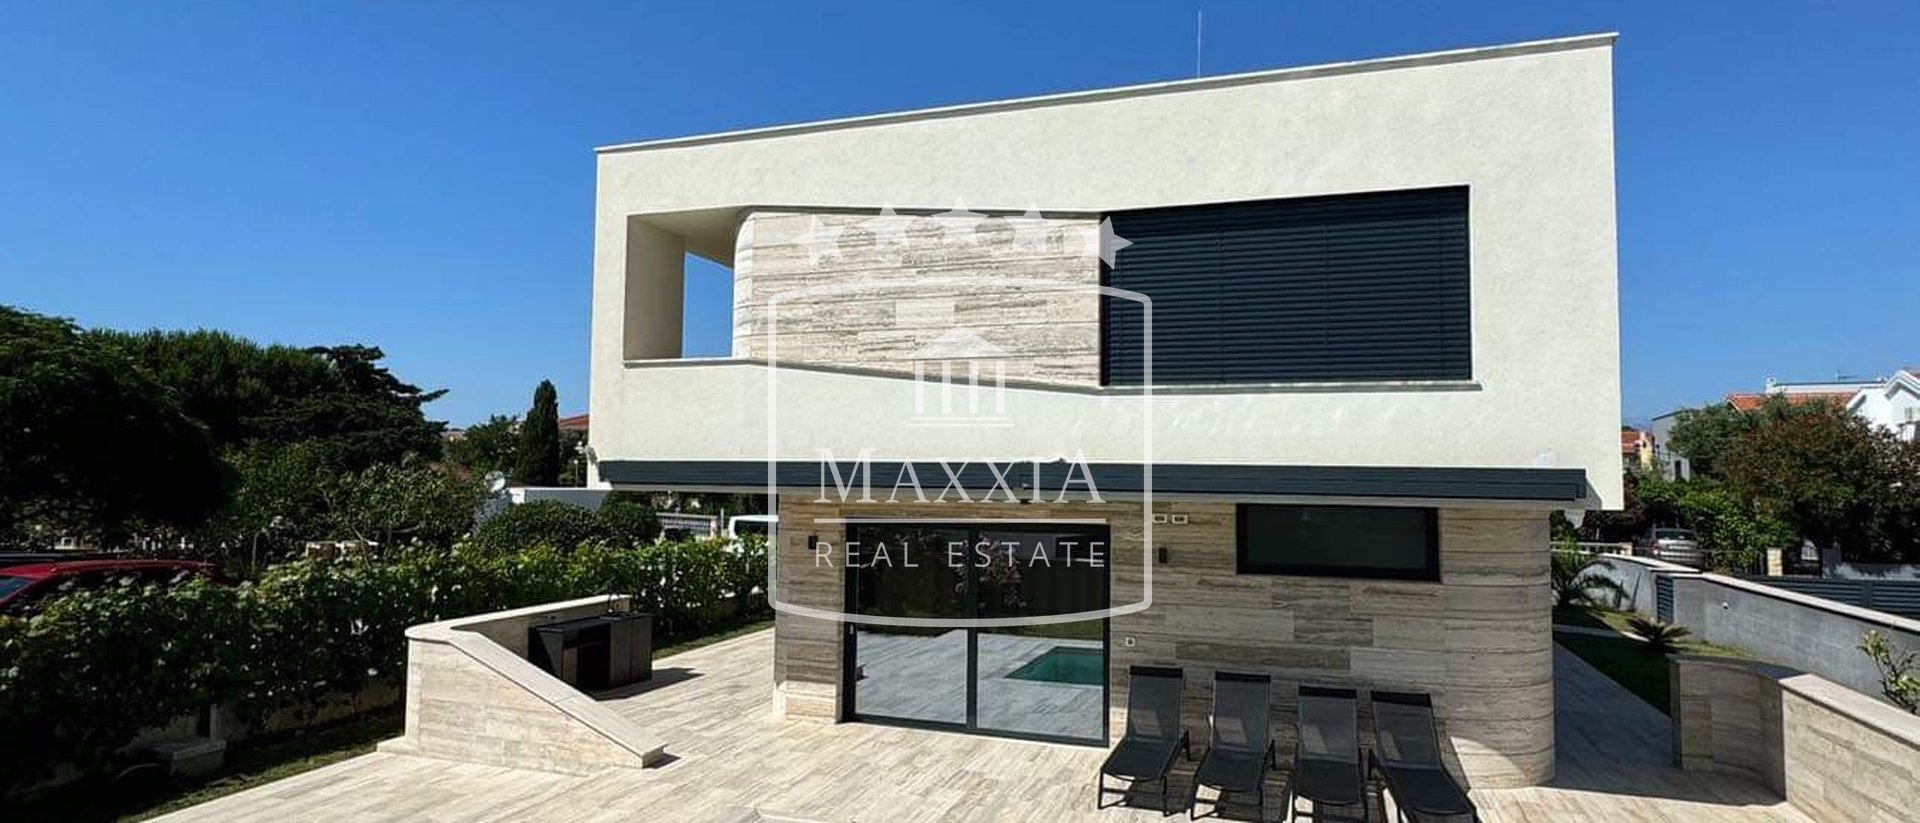 Privlaka - Modern villa 250m2 privater Zugang zum Meer 20m. 1.690.000€